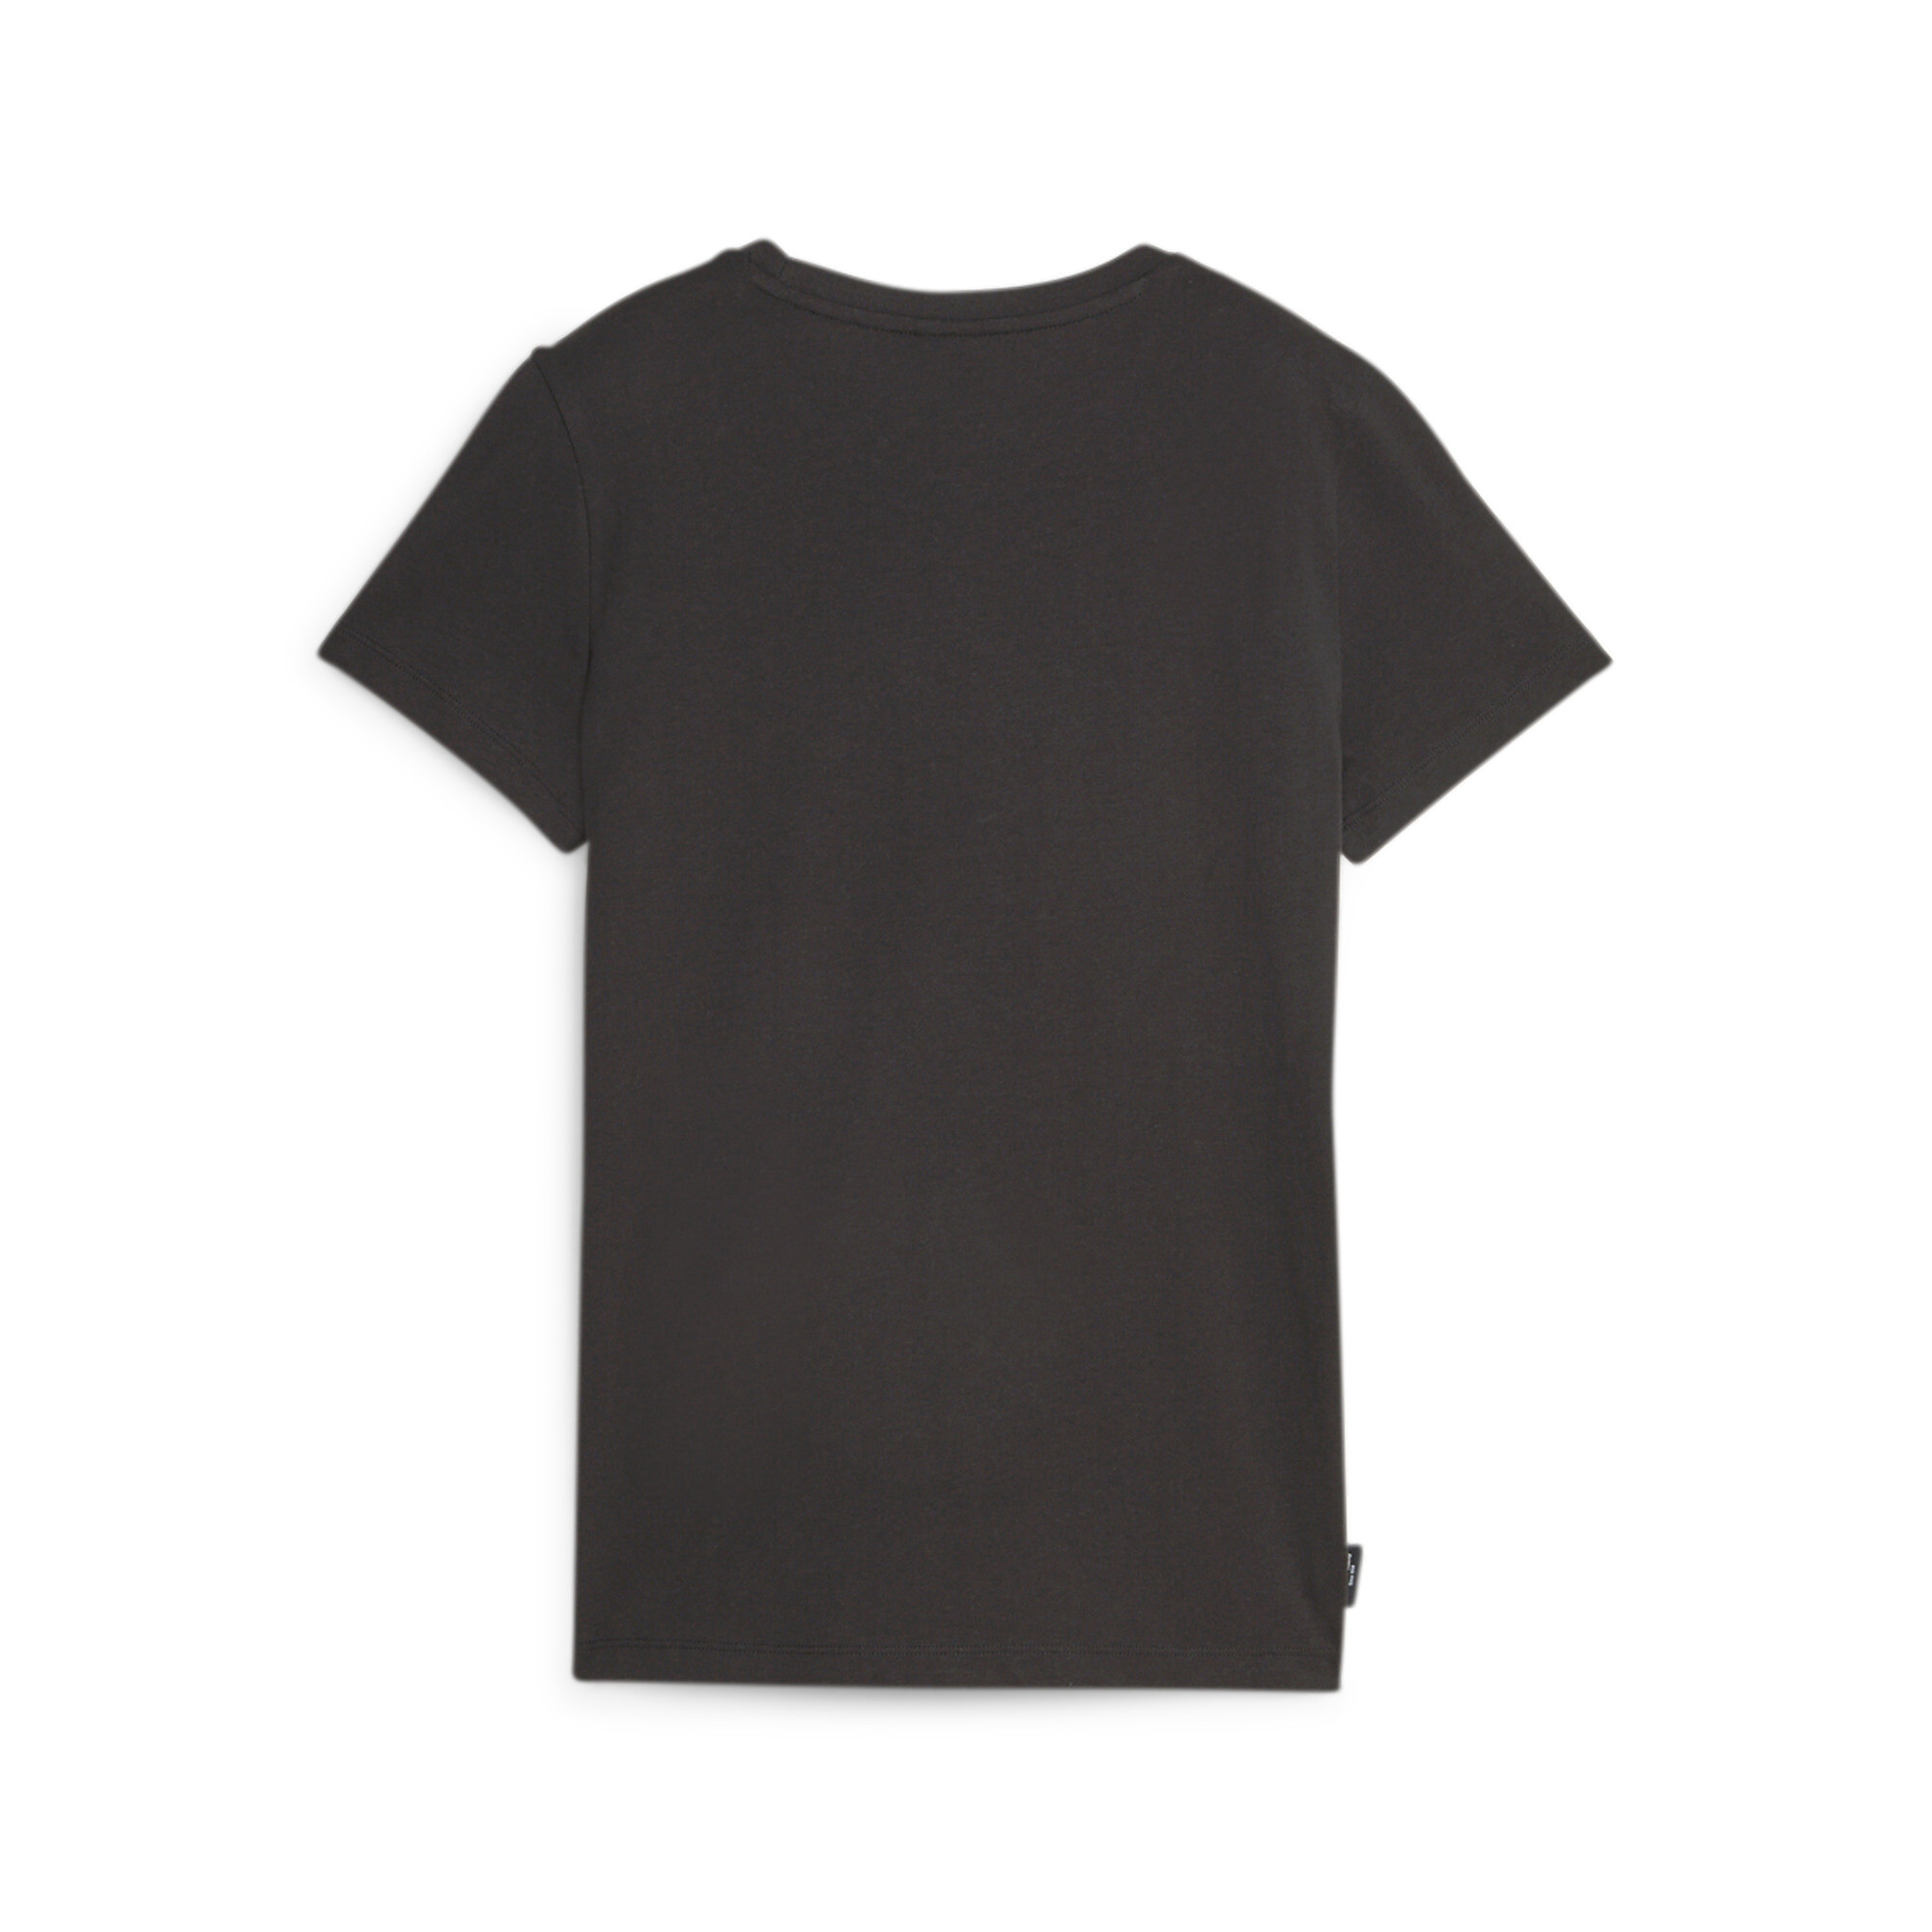 Women's Sportswear By PUMA Graphic T-Shirt In Black, Size XL